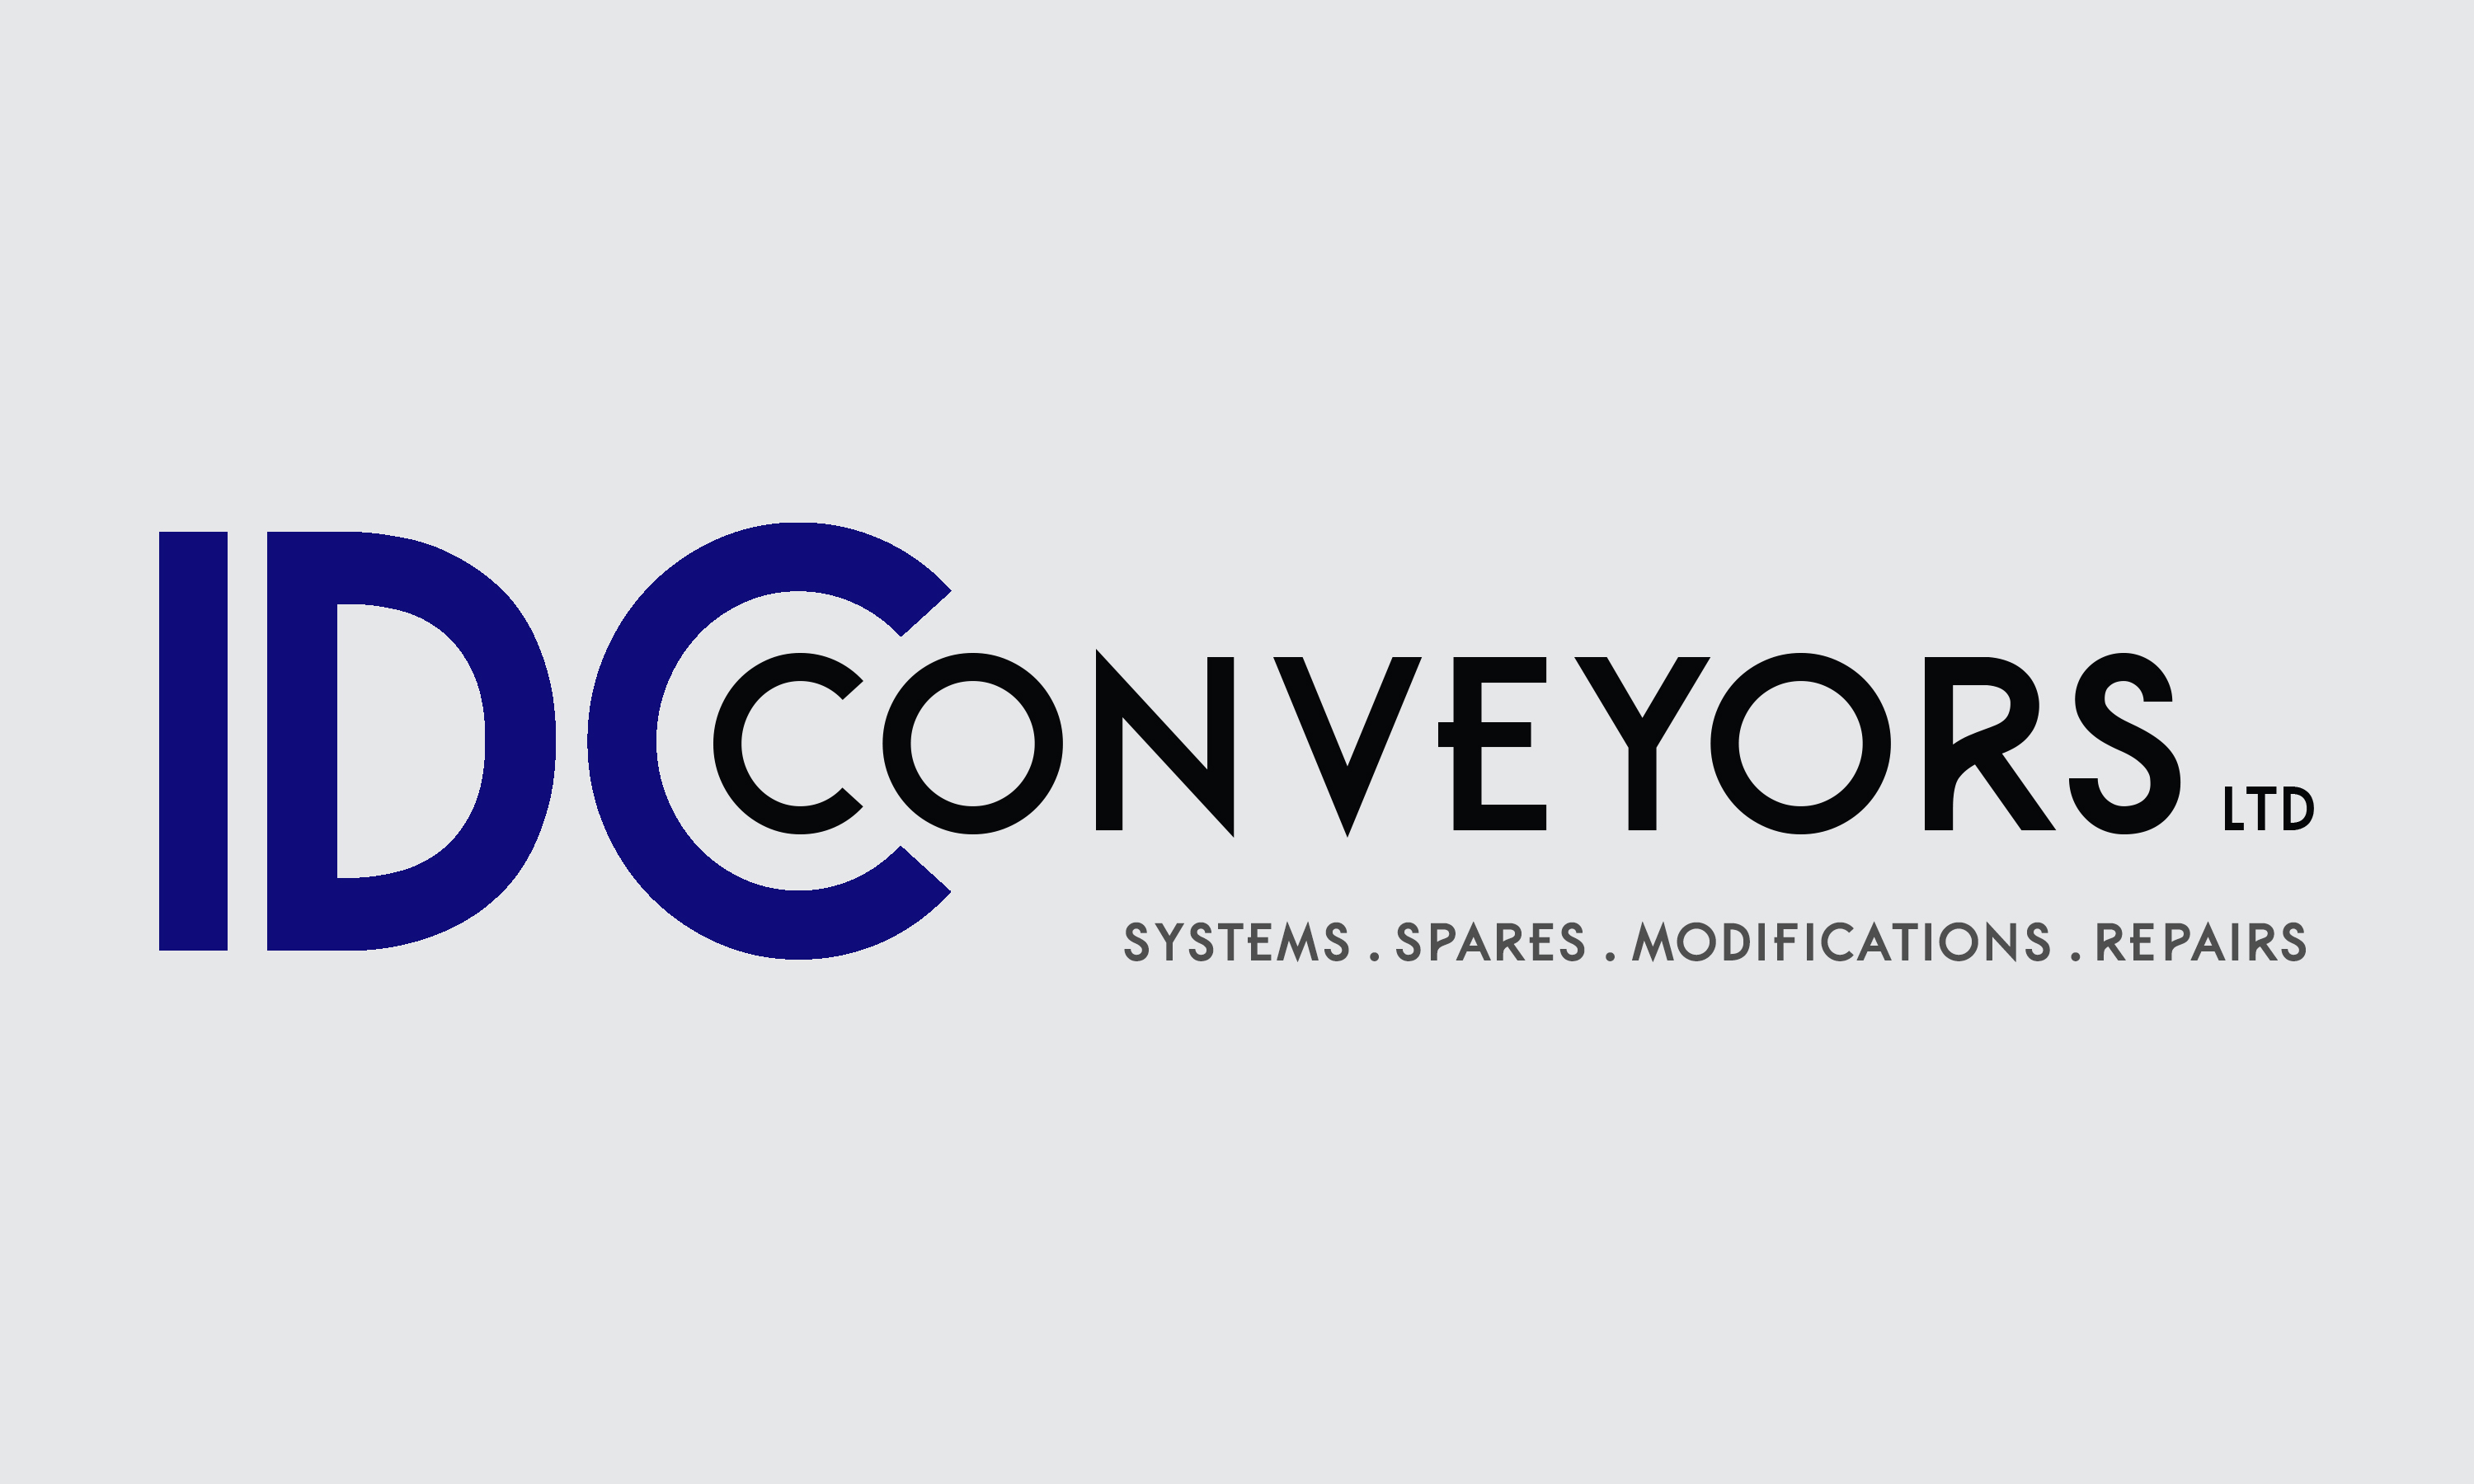 IDC Conveyors Ltd